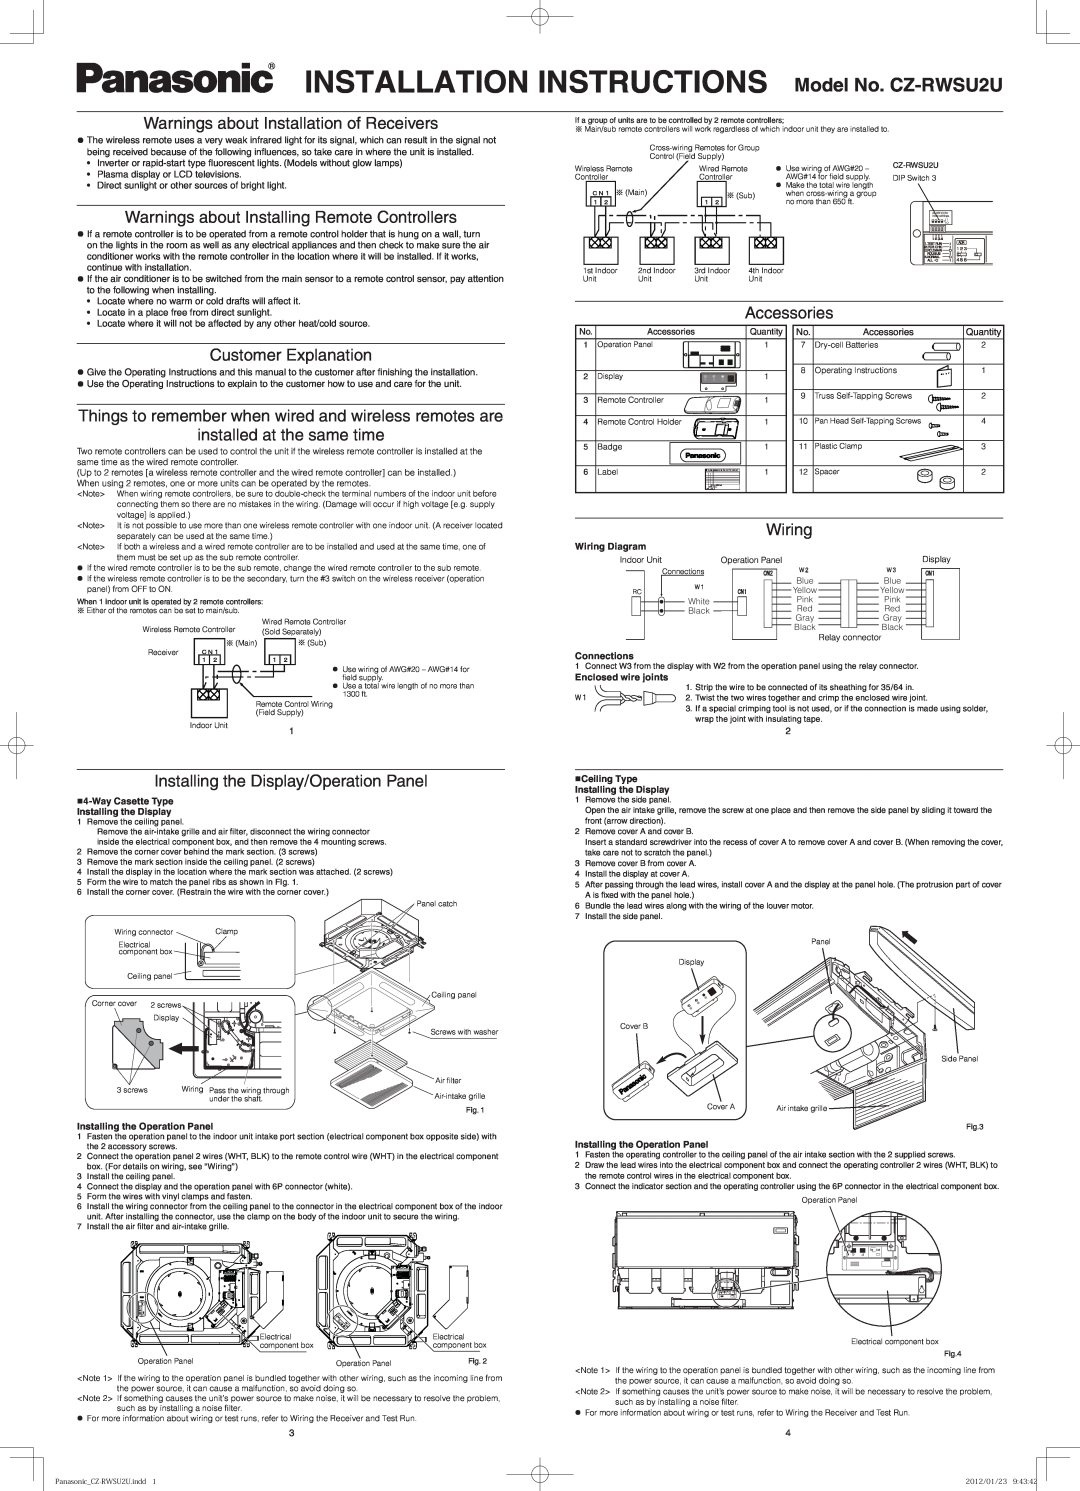 Panasonic CZ-RWSU2U installation instructions Warnings about Installation of Receivers, Accessories, Customer Explanation 